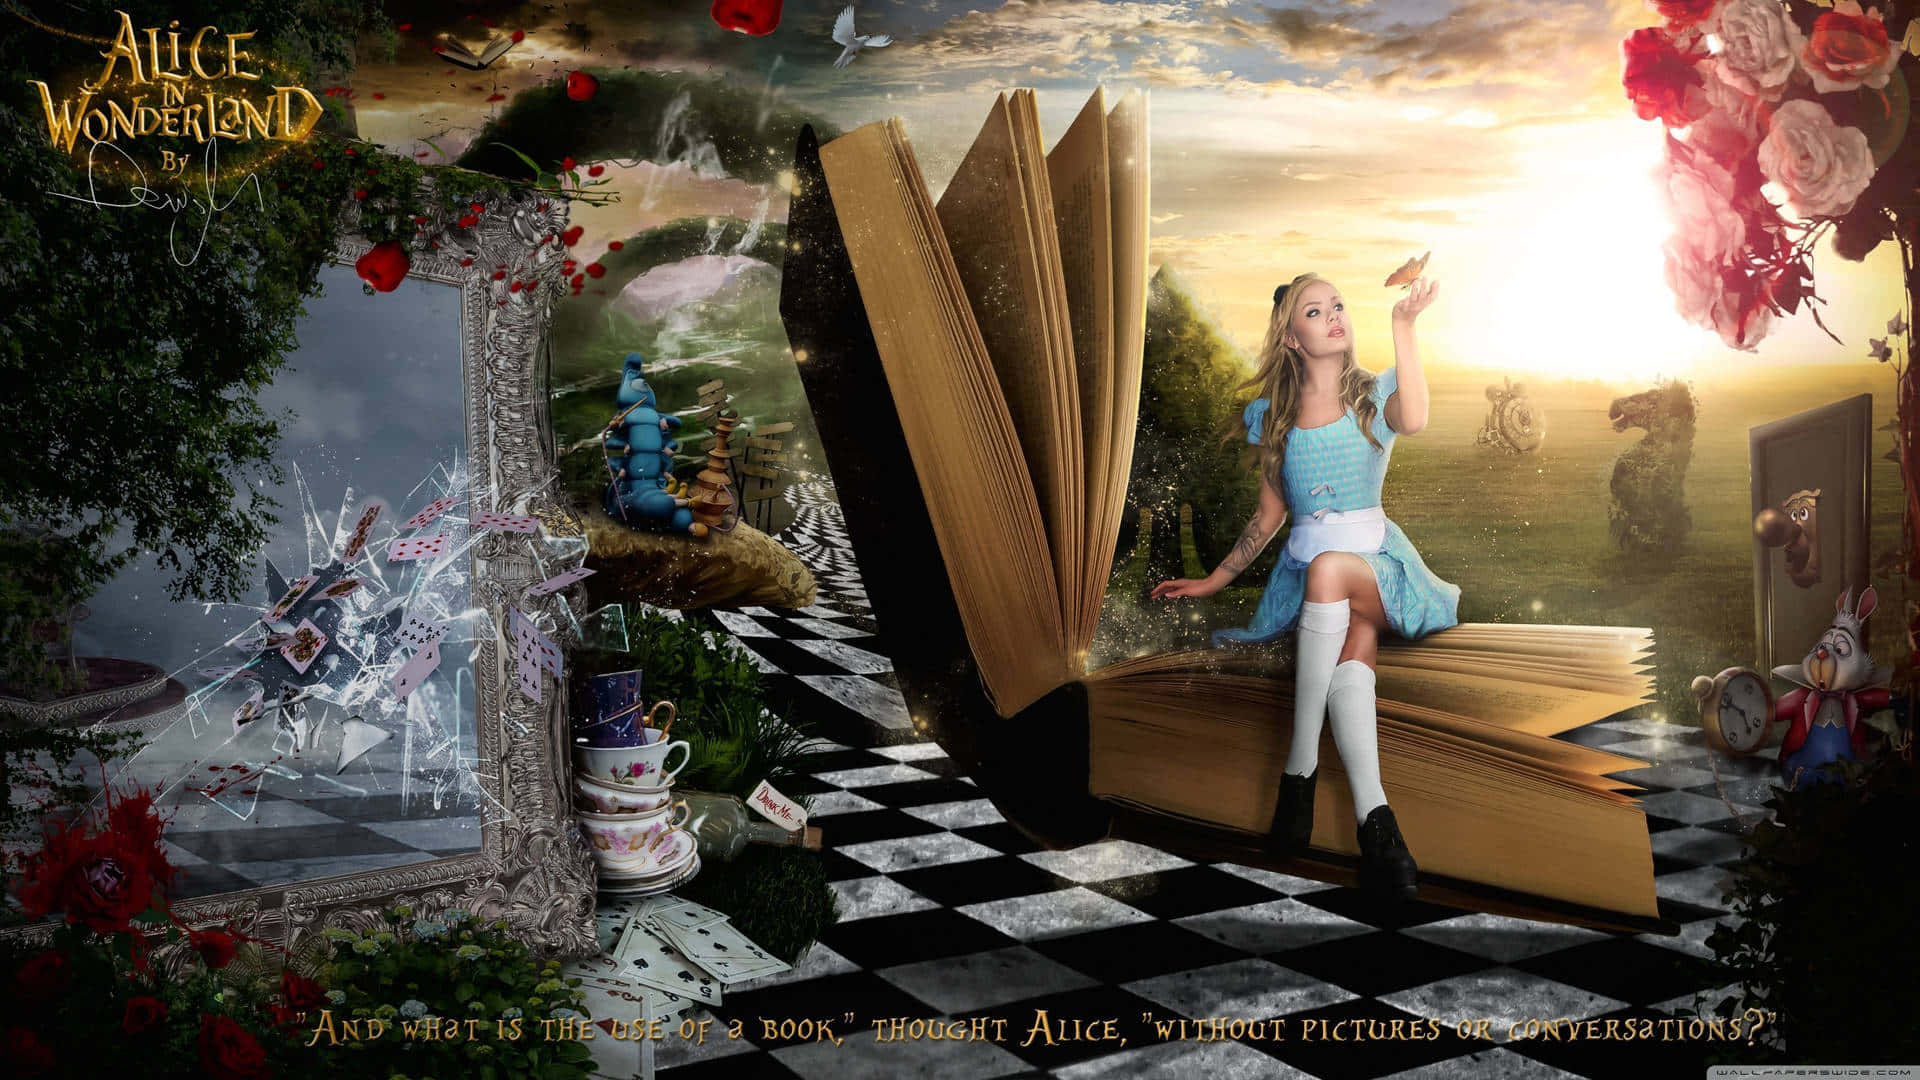 Follow Alice Through Wonderland